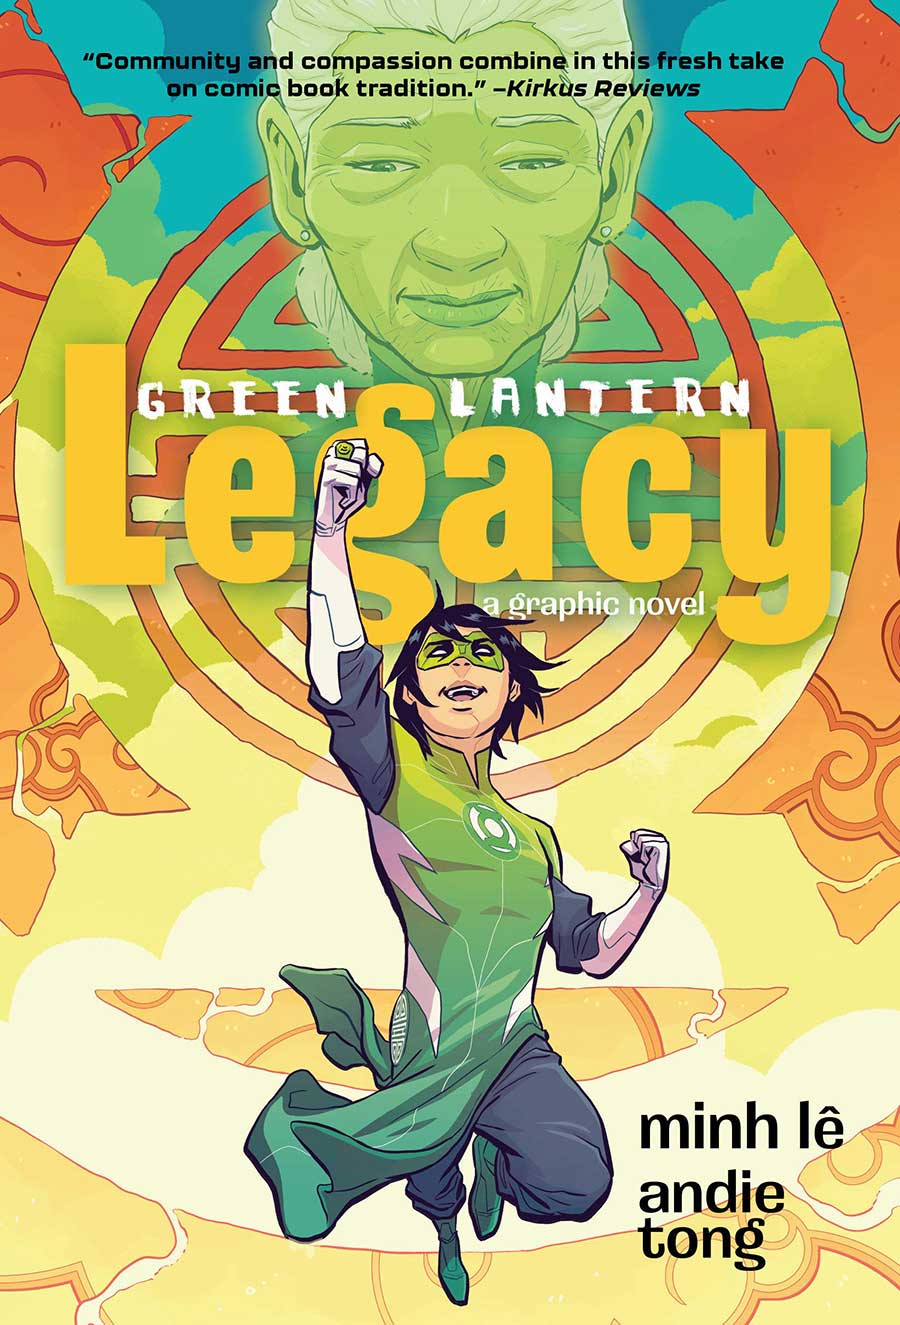 Green Lantern: Legacy book cover.